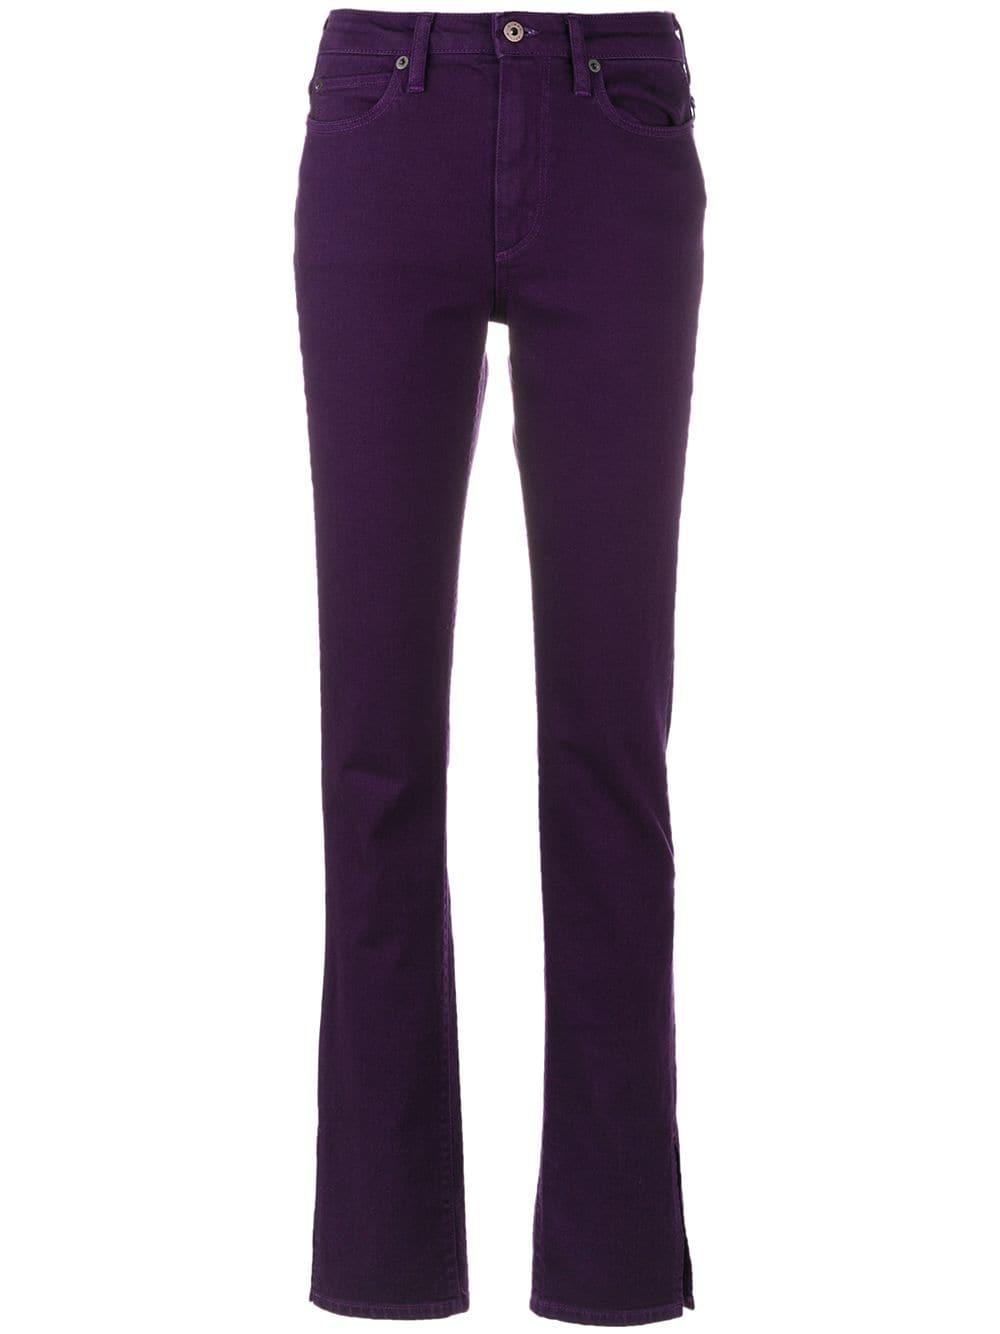 Simon Miller Denim Bootcut Jeans in Pink & Purple (Purple) - Lyst